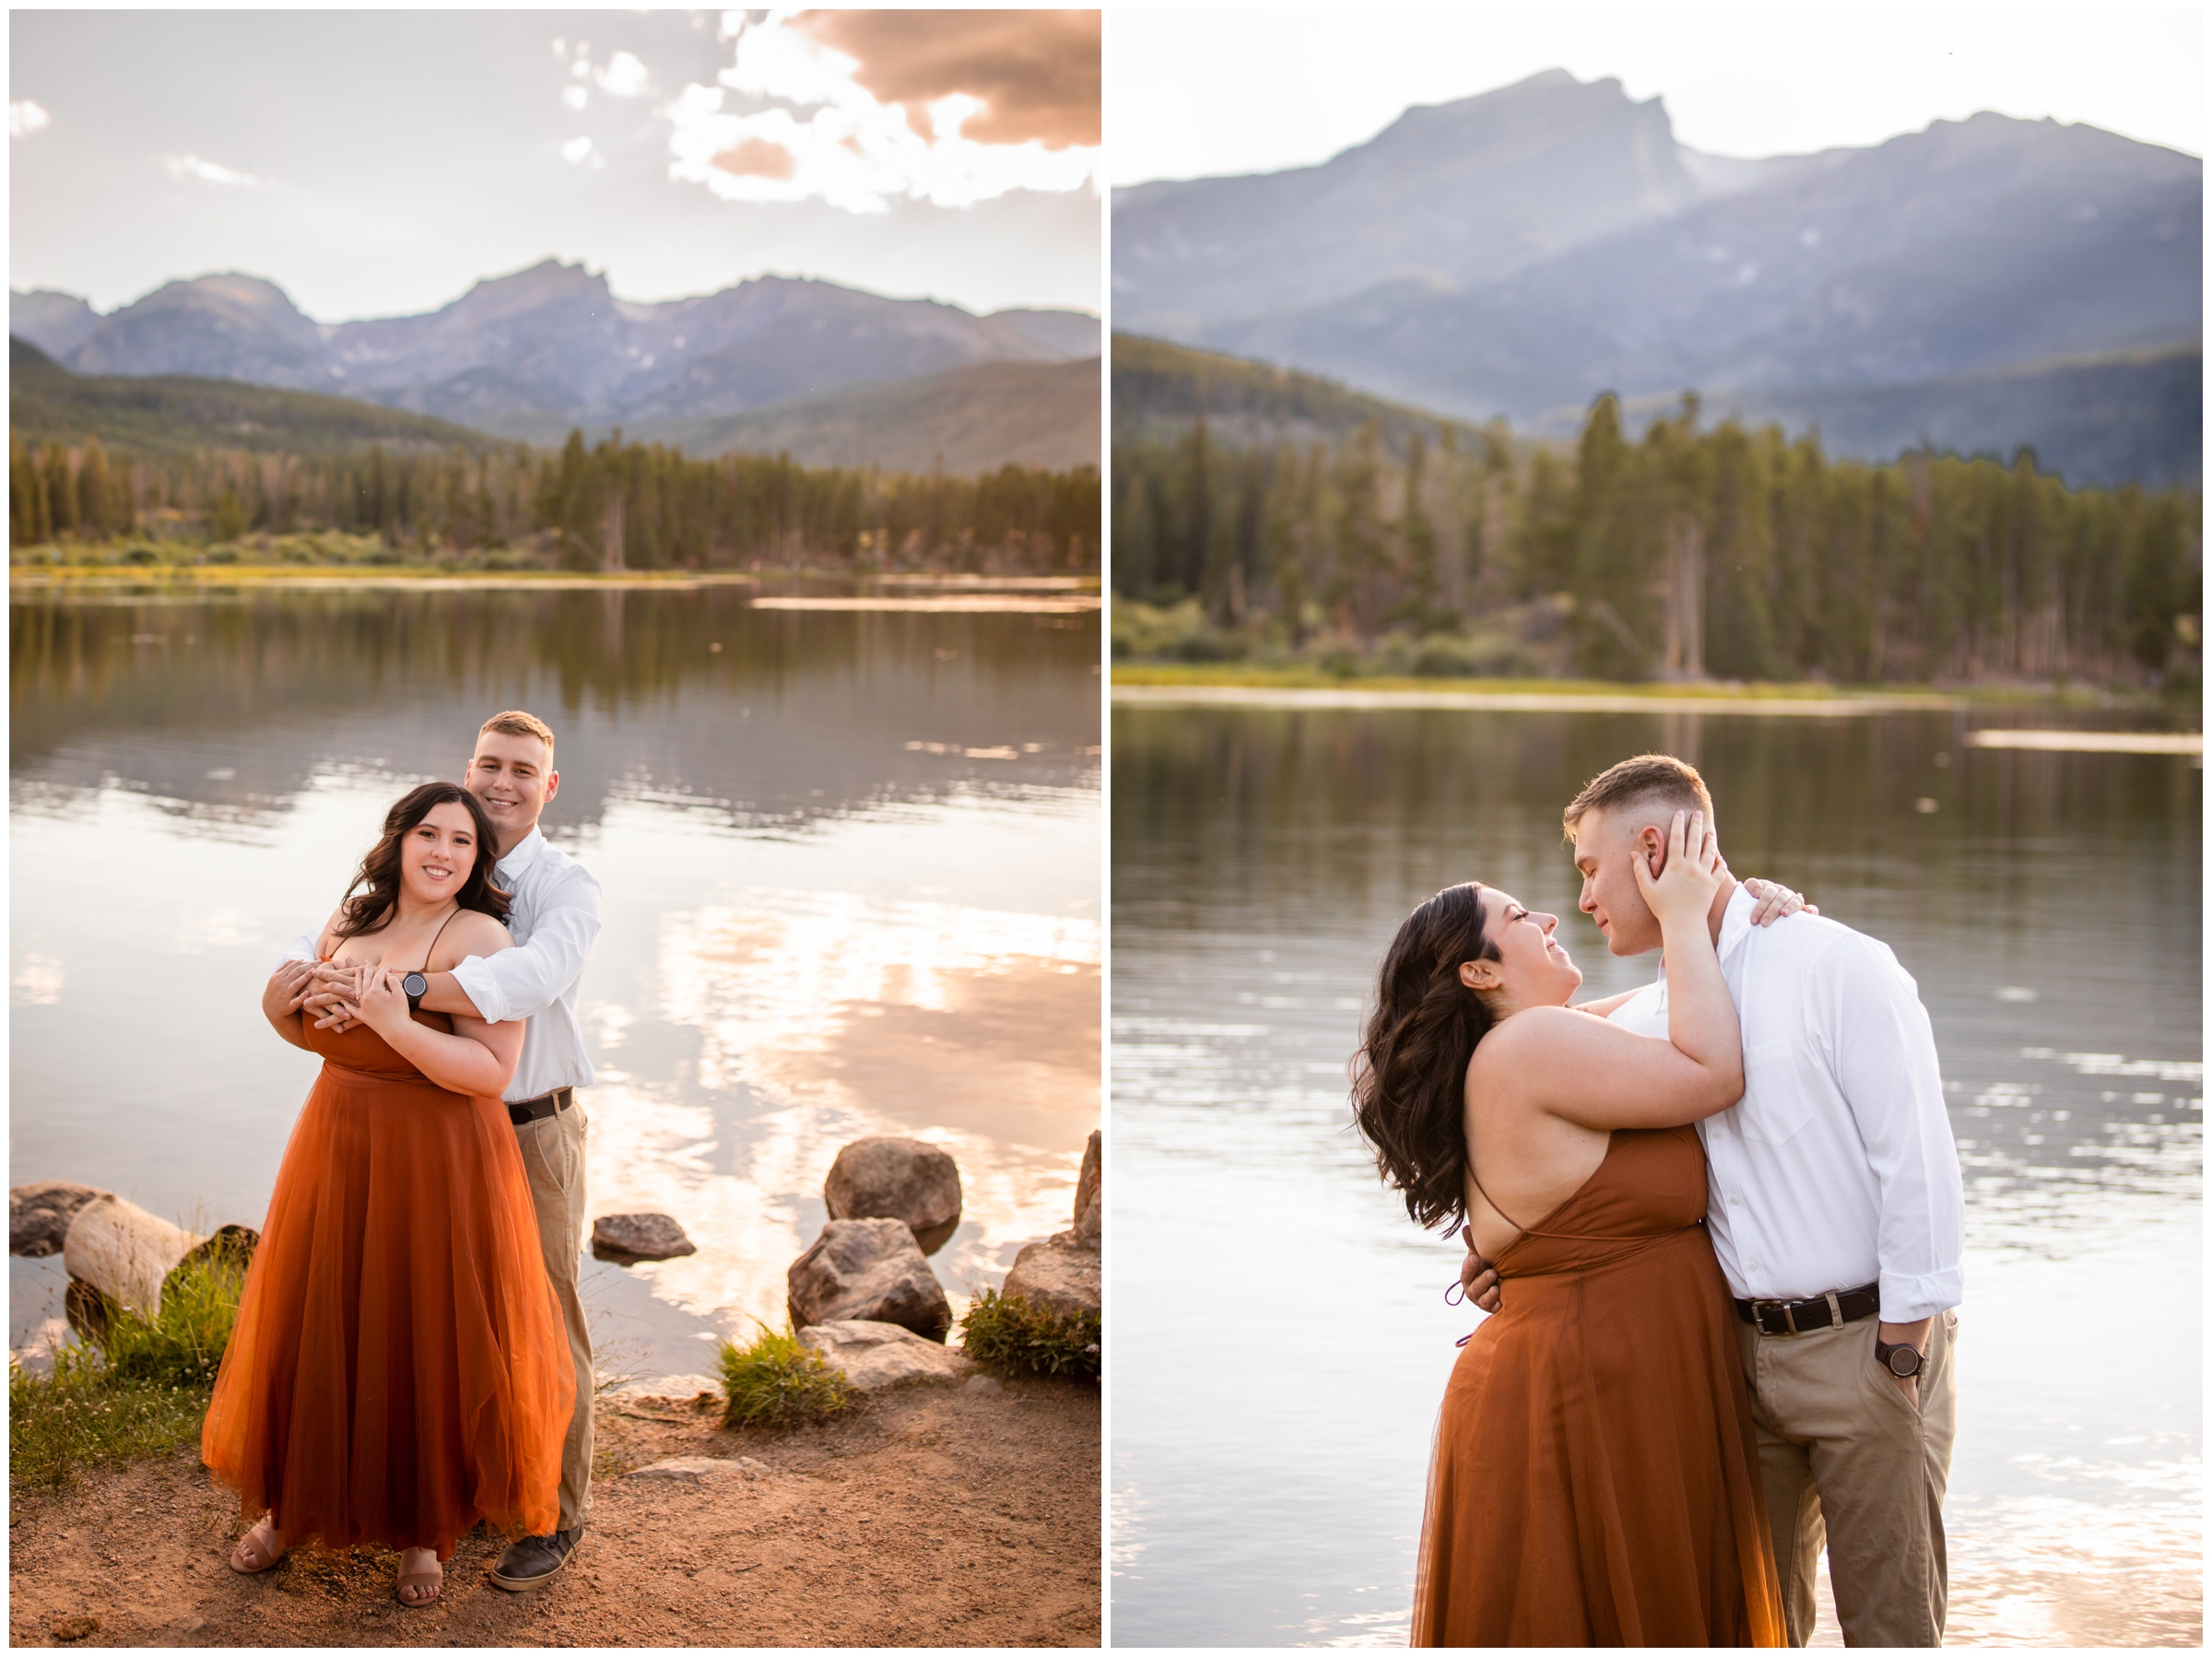 RMNP engagement photography session at Sprague Lake by Estes Park wedding photographer Plum Pretty Photography